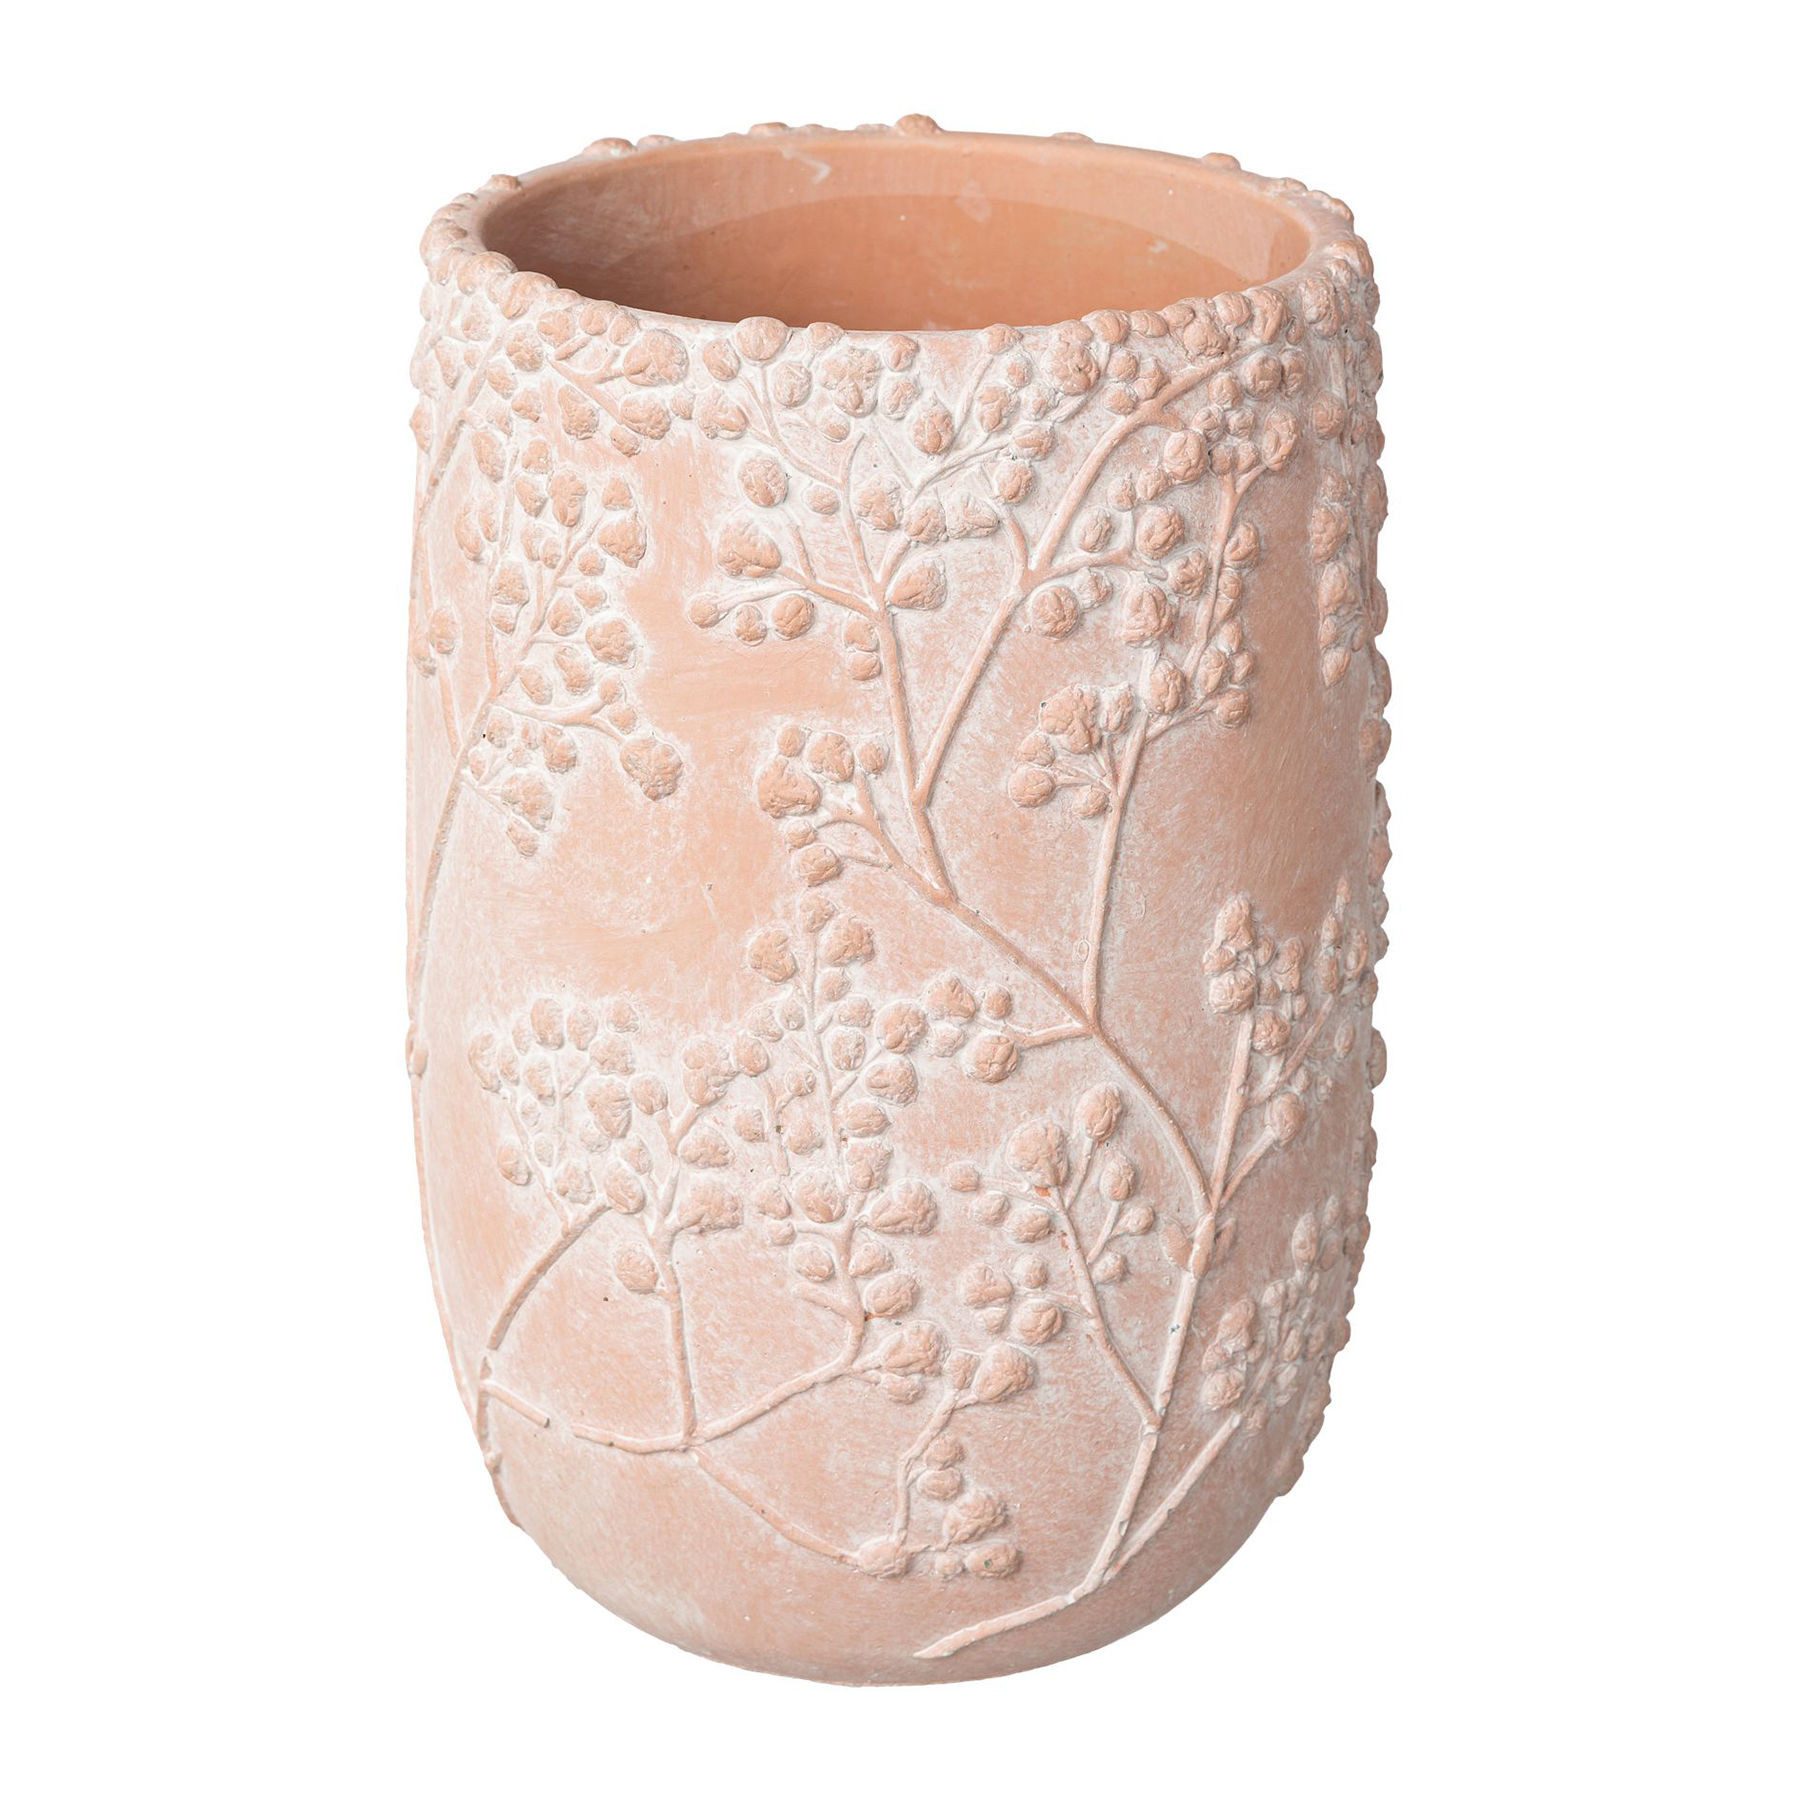 Georg Stiels Dekoobjekt aus Keramik, mit dekorativem Schleierkraut, rosa